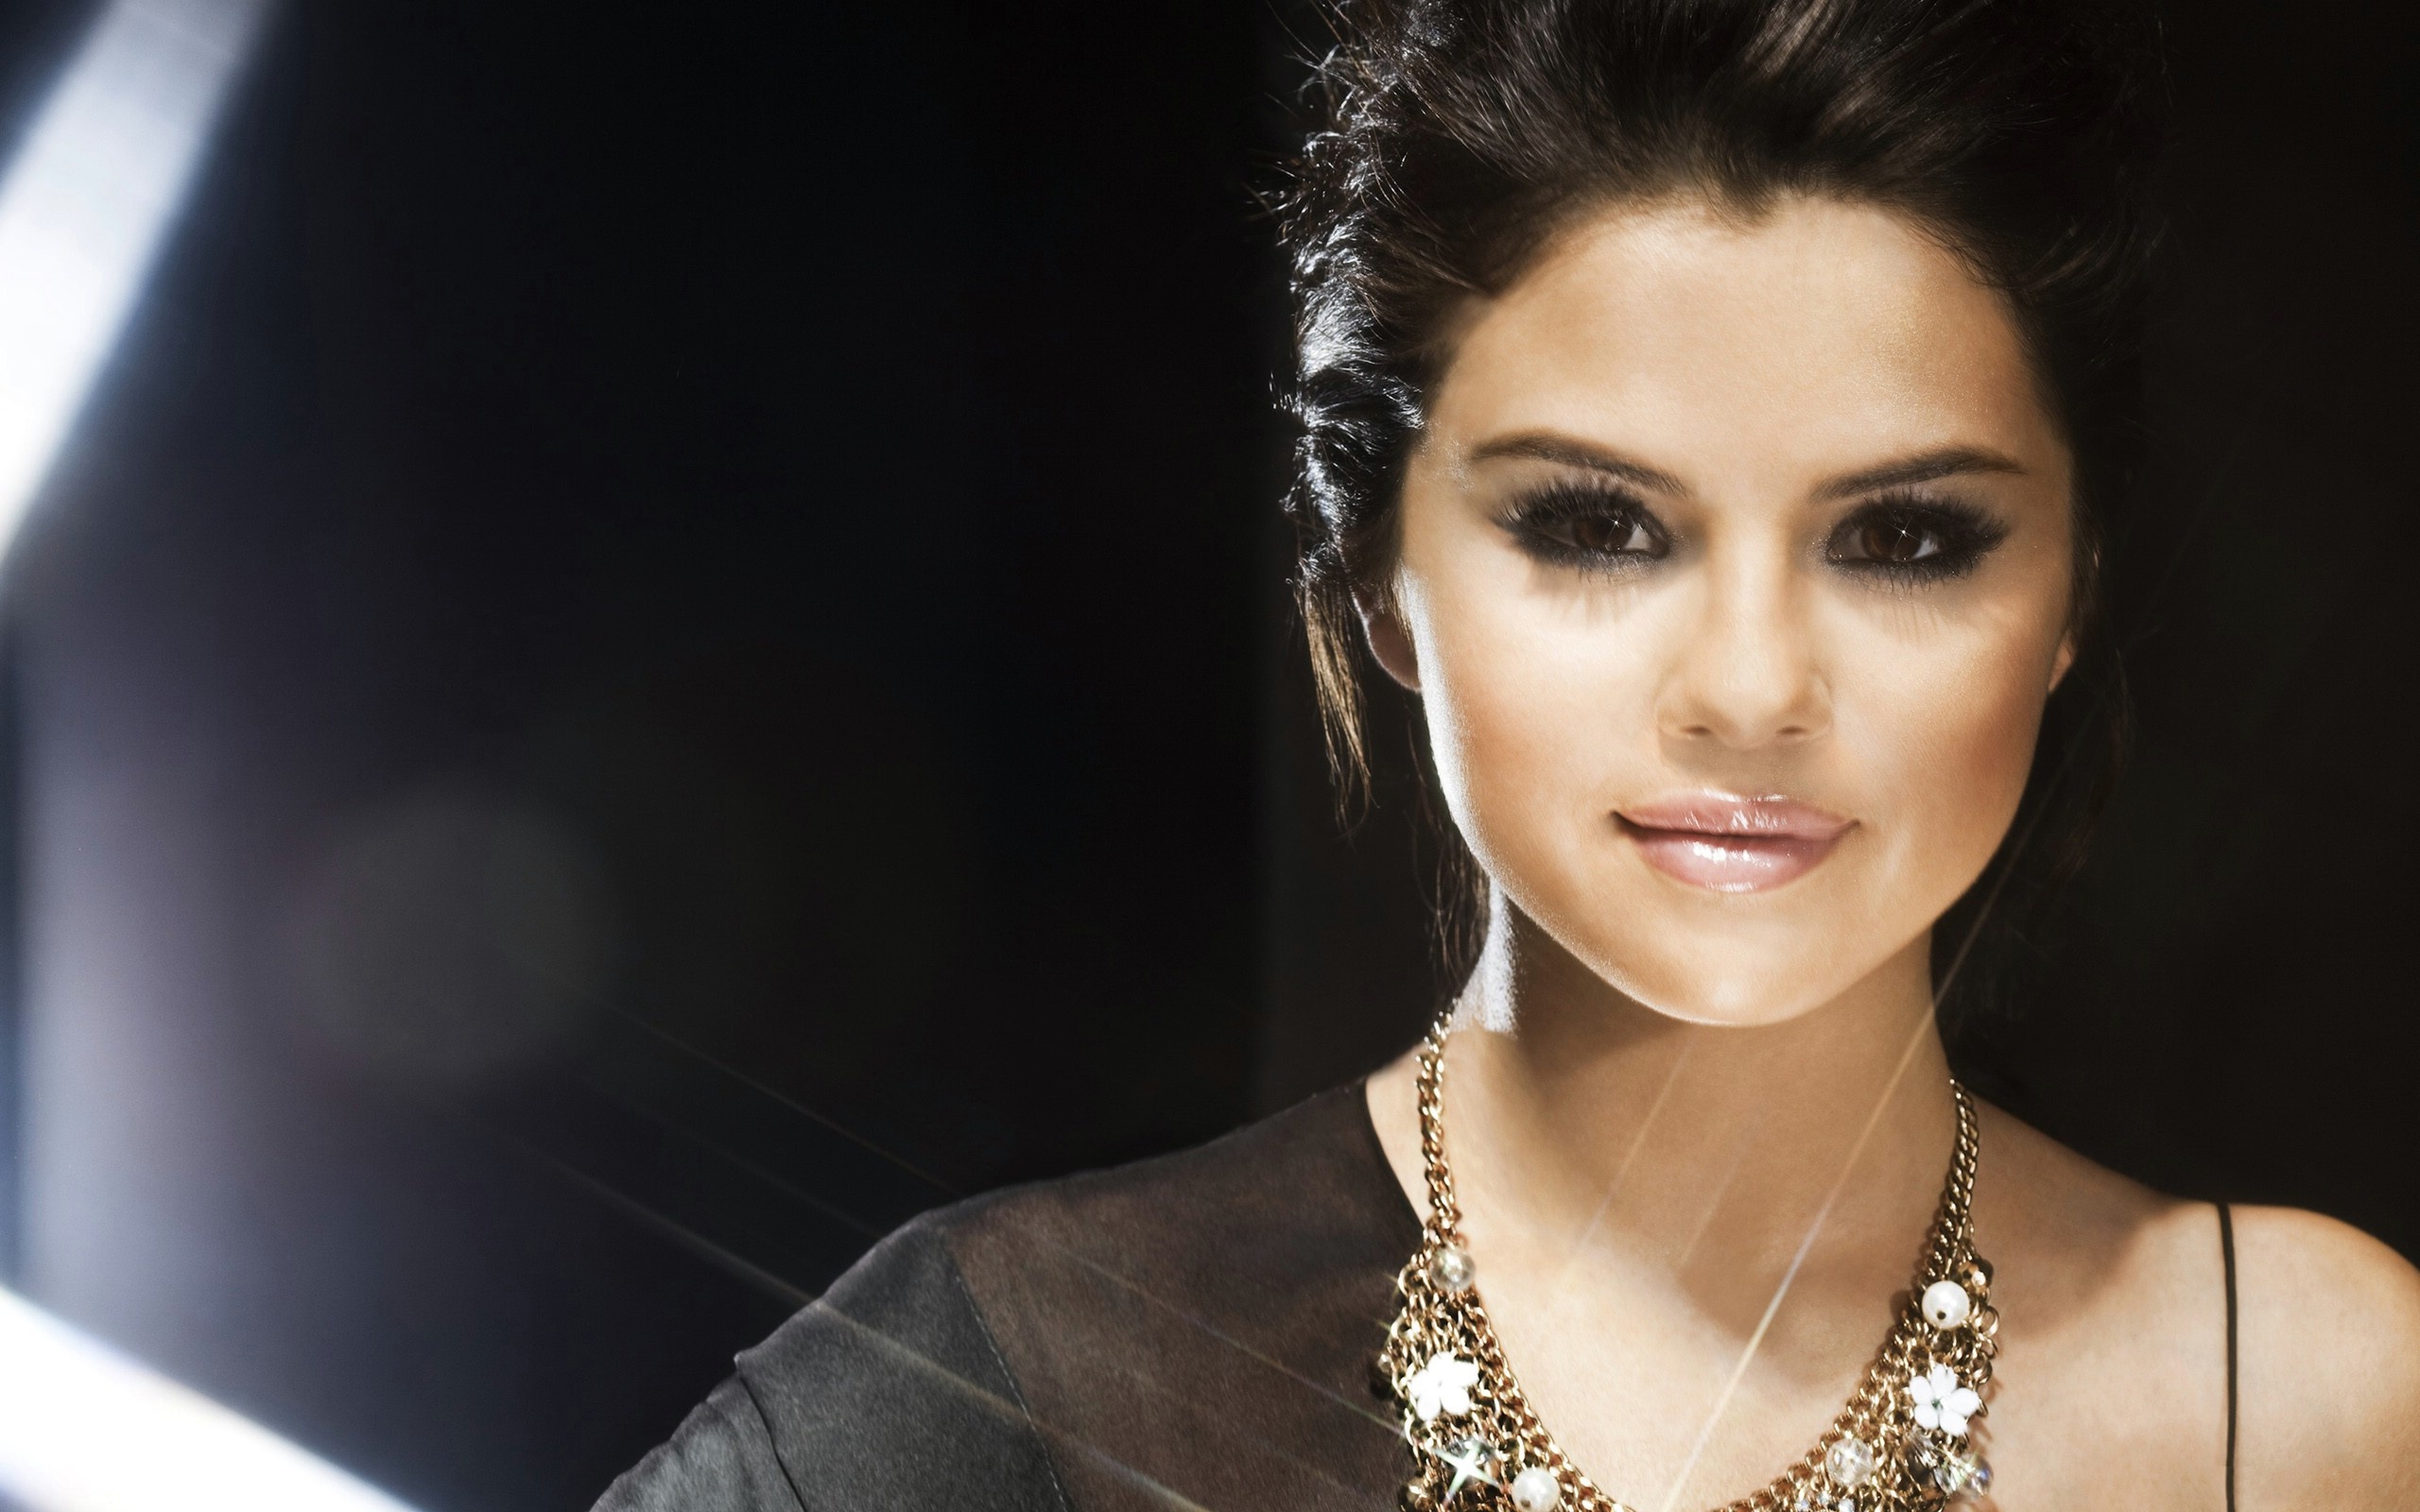 Popular Pop Singer Selena Gomez Wallpaper And Image